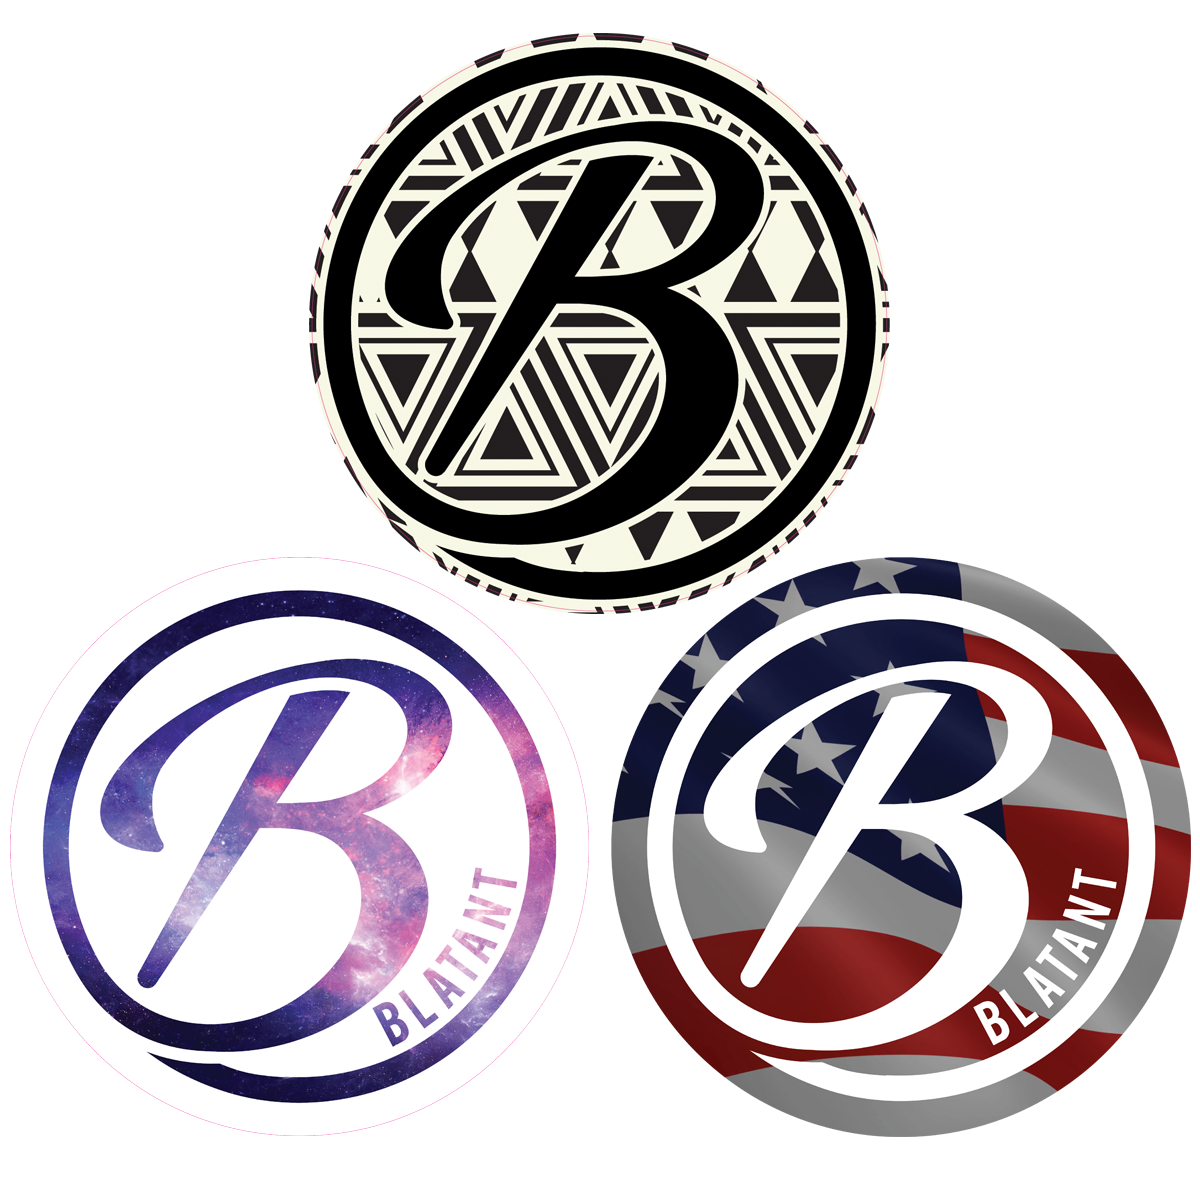 LV B Stickers